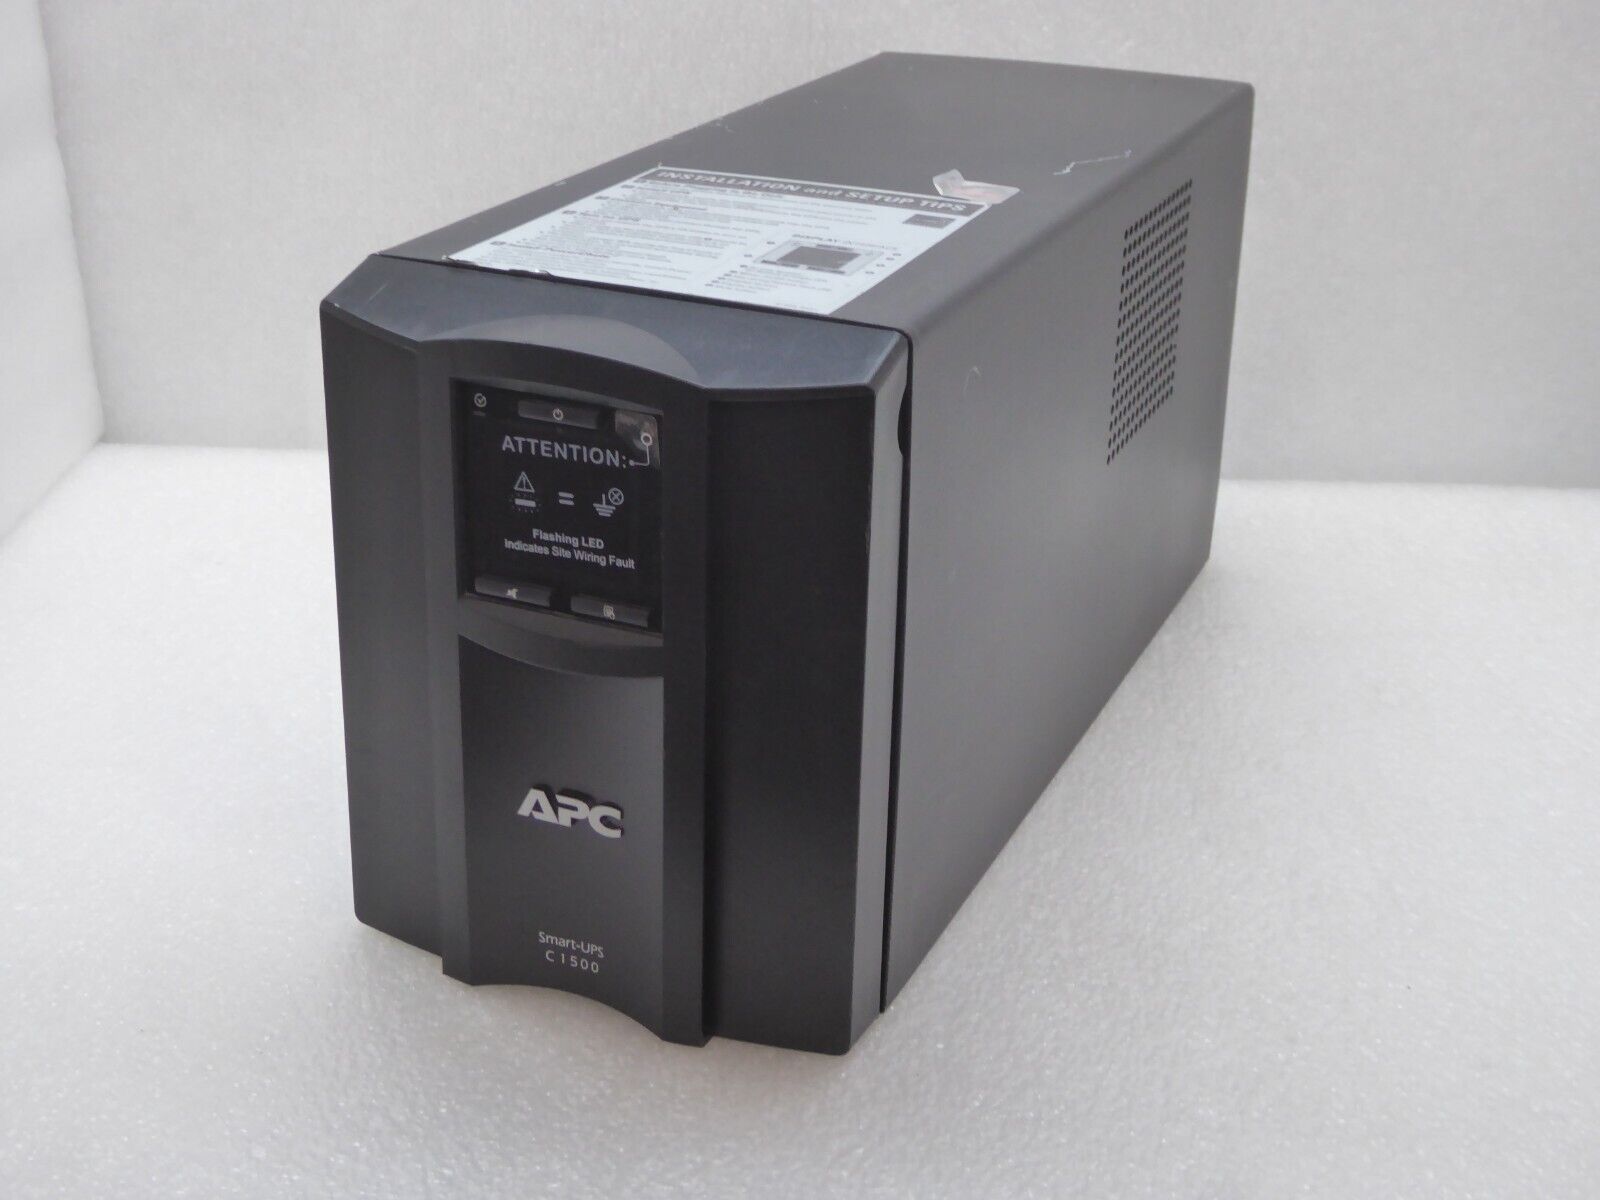 APC Smart UPS C1500 SMC1500C 1500VA 120V LCD UPS Battery Backup UPS-NO Battery